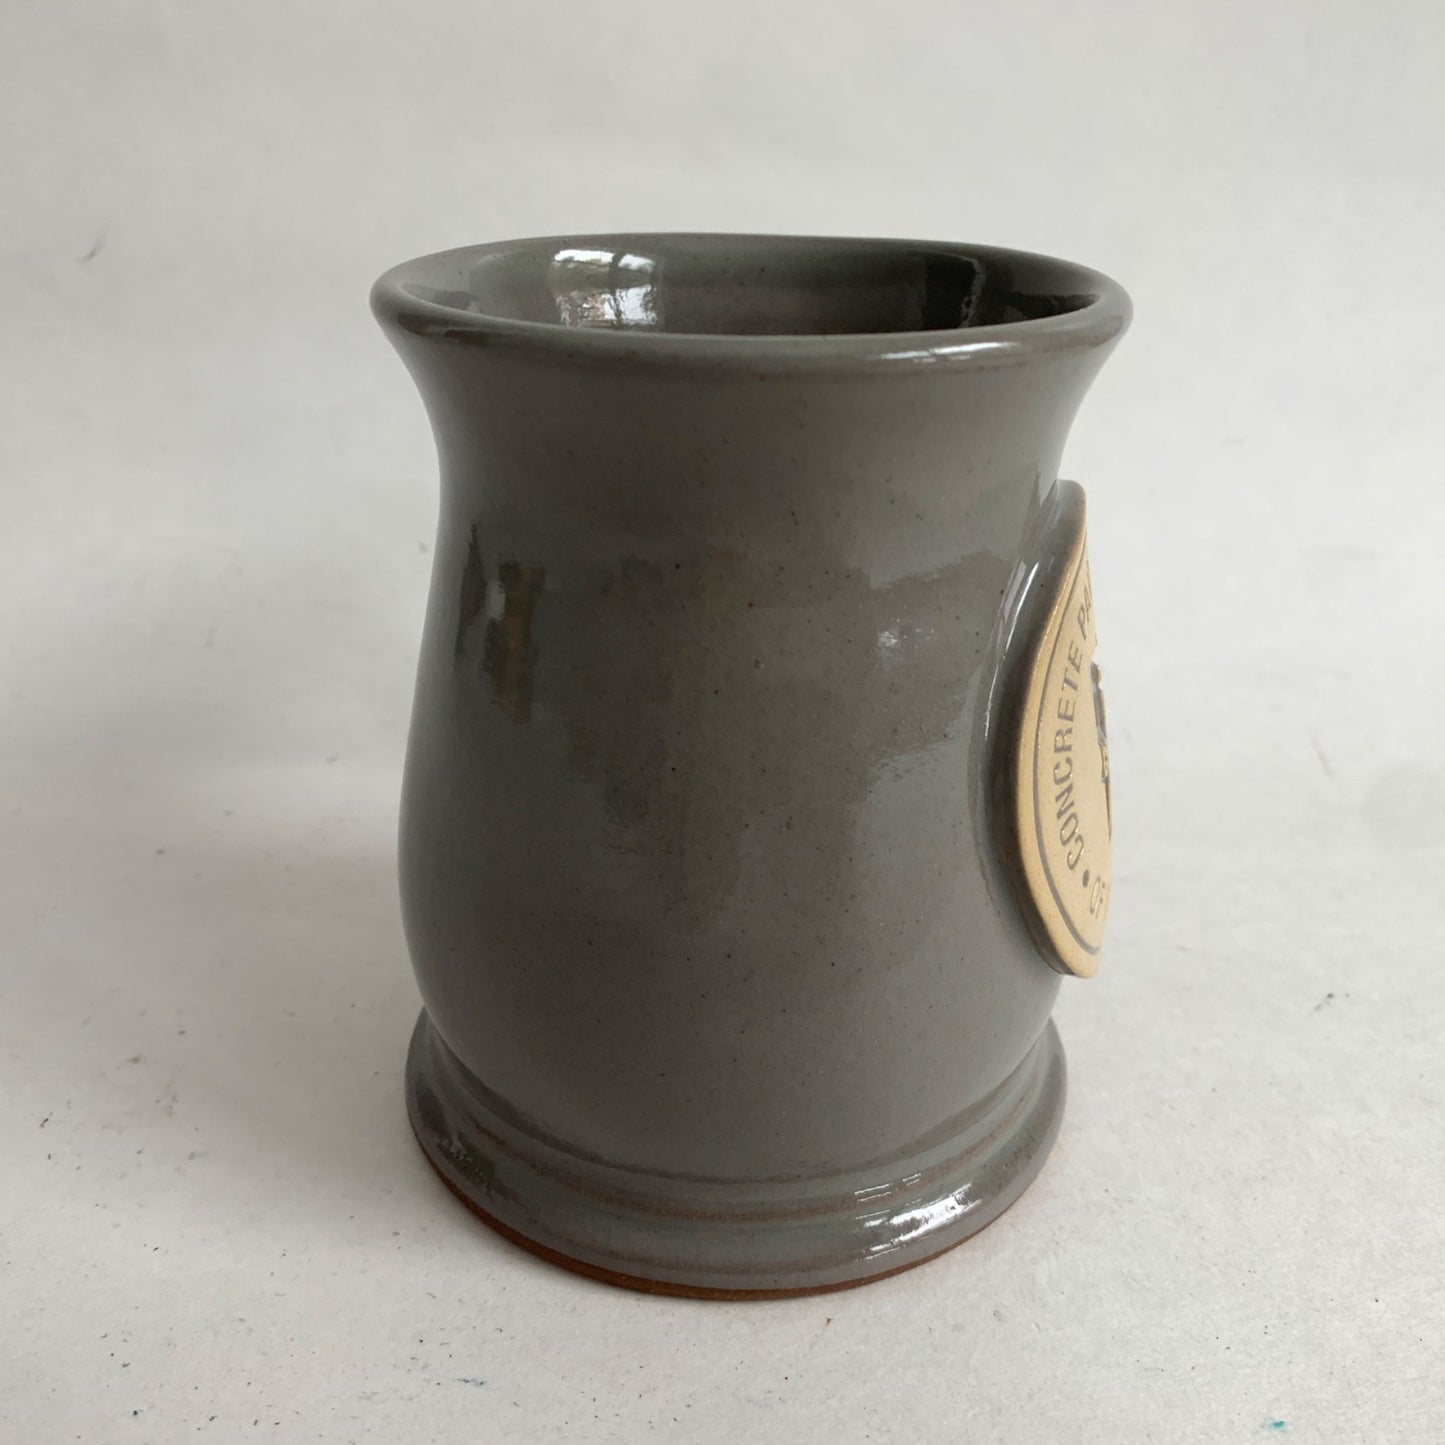 CPAM Concrete Paving of Minnesota Gray Coffee Mug Ceramic Sunset Hill Stoneware